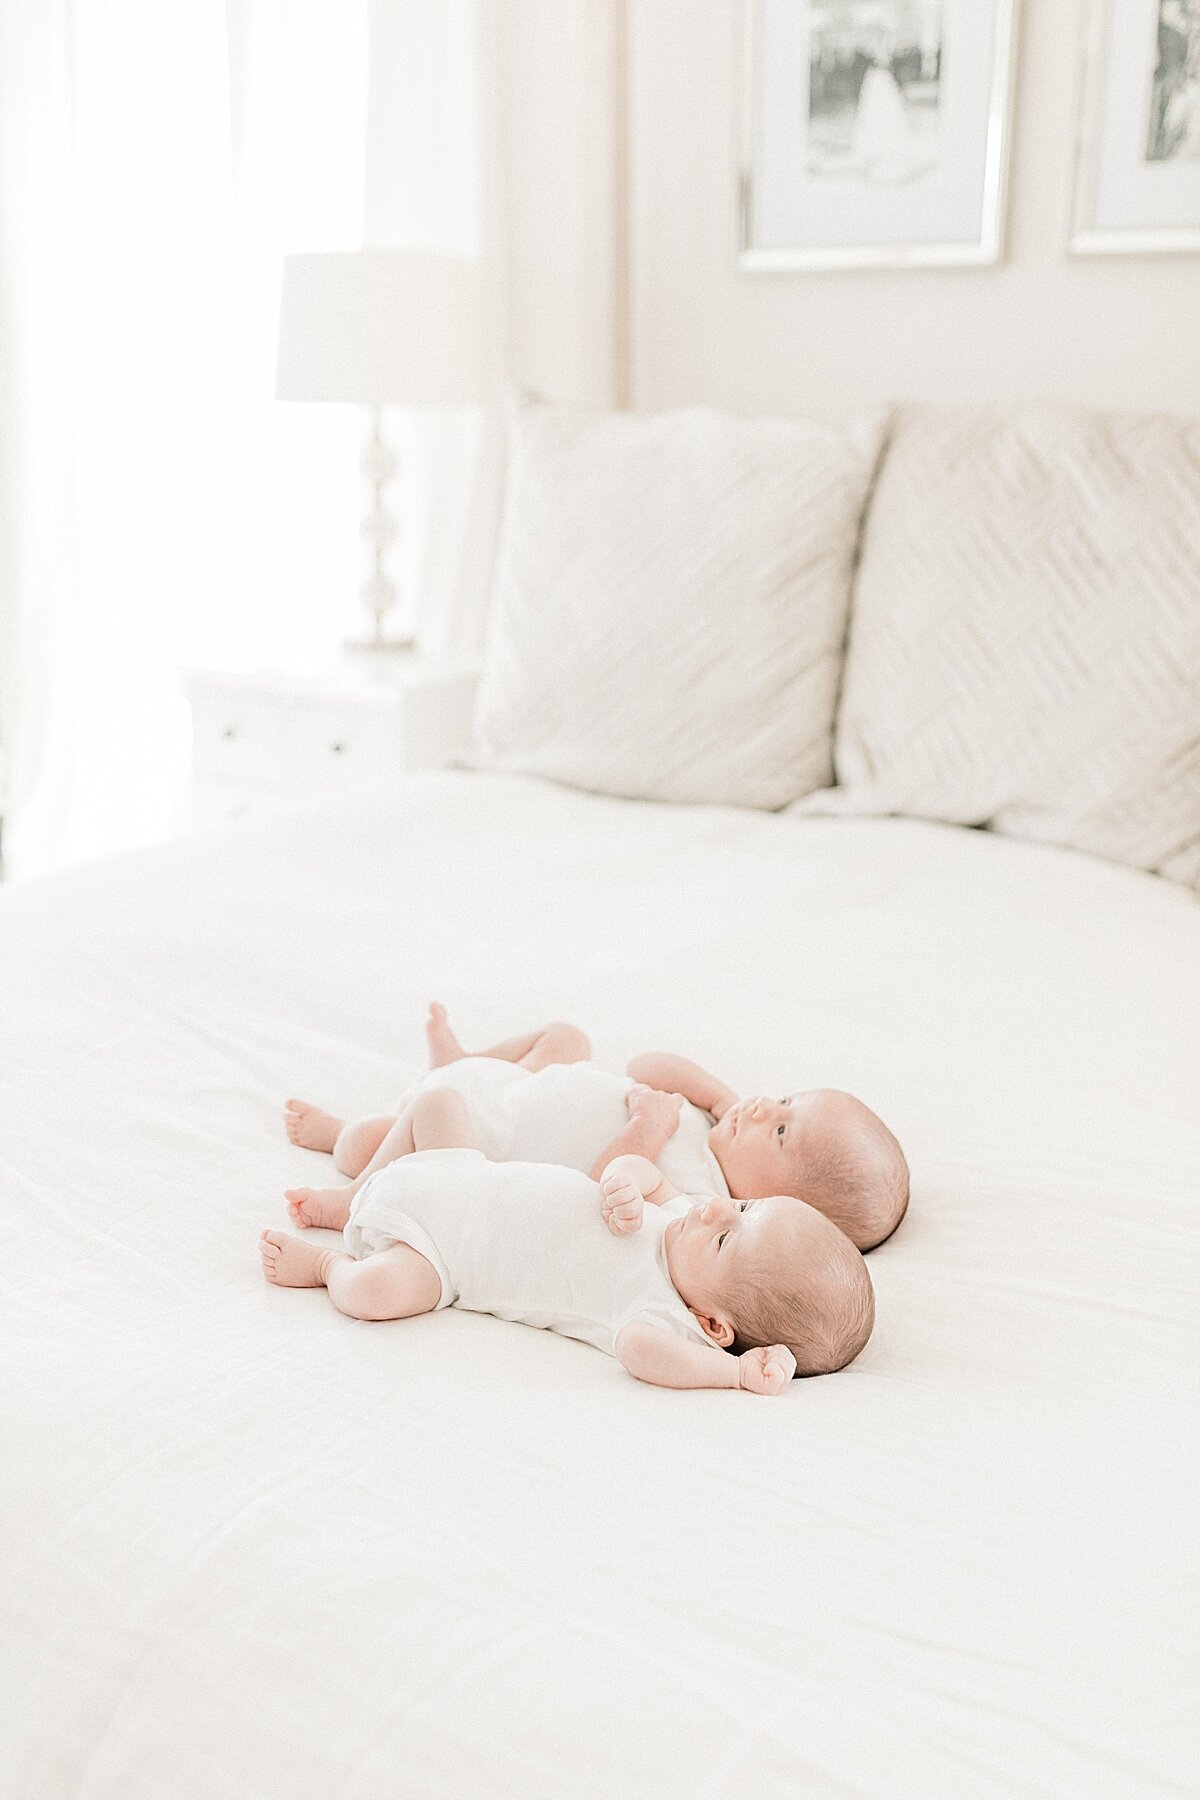 charleston-baby-photographer-twin-newborn-session-caitlyn-motycka-photography_0004